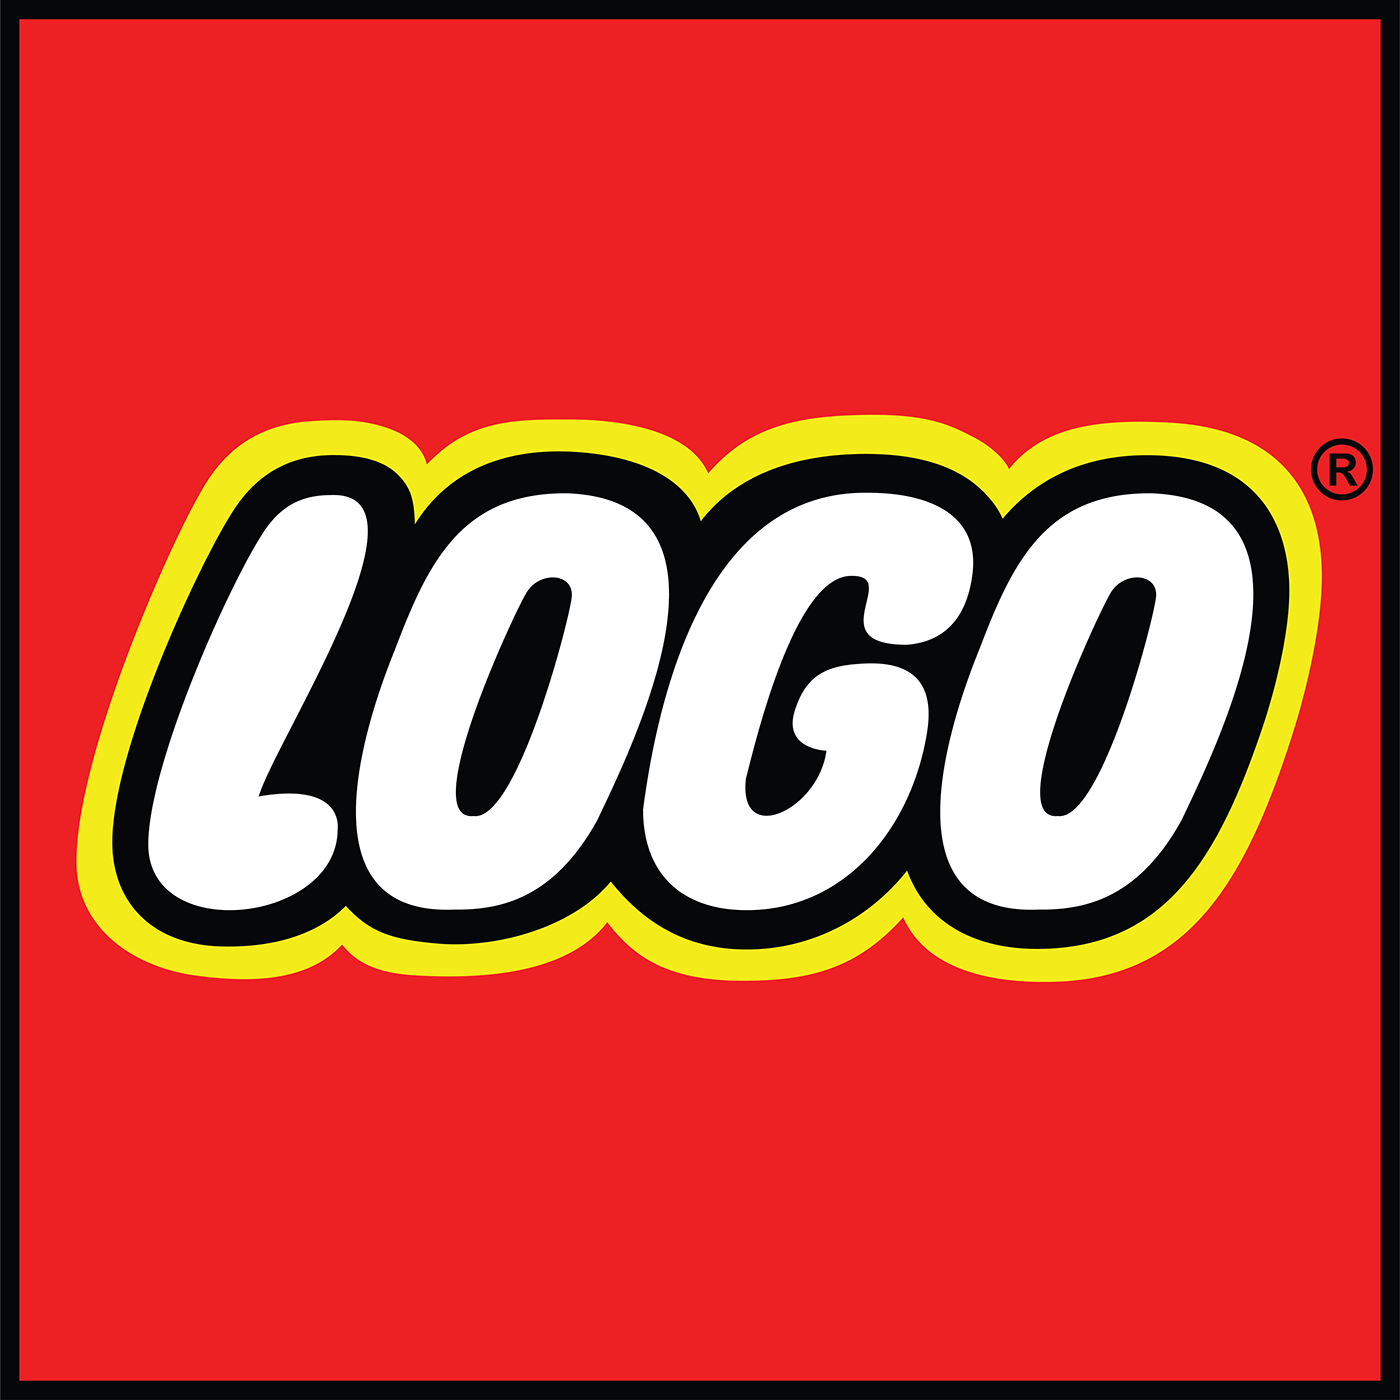 popart logo 7eleven subway arco LEGO target